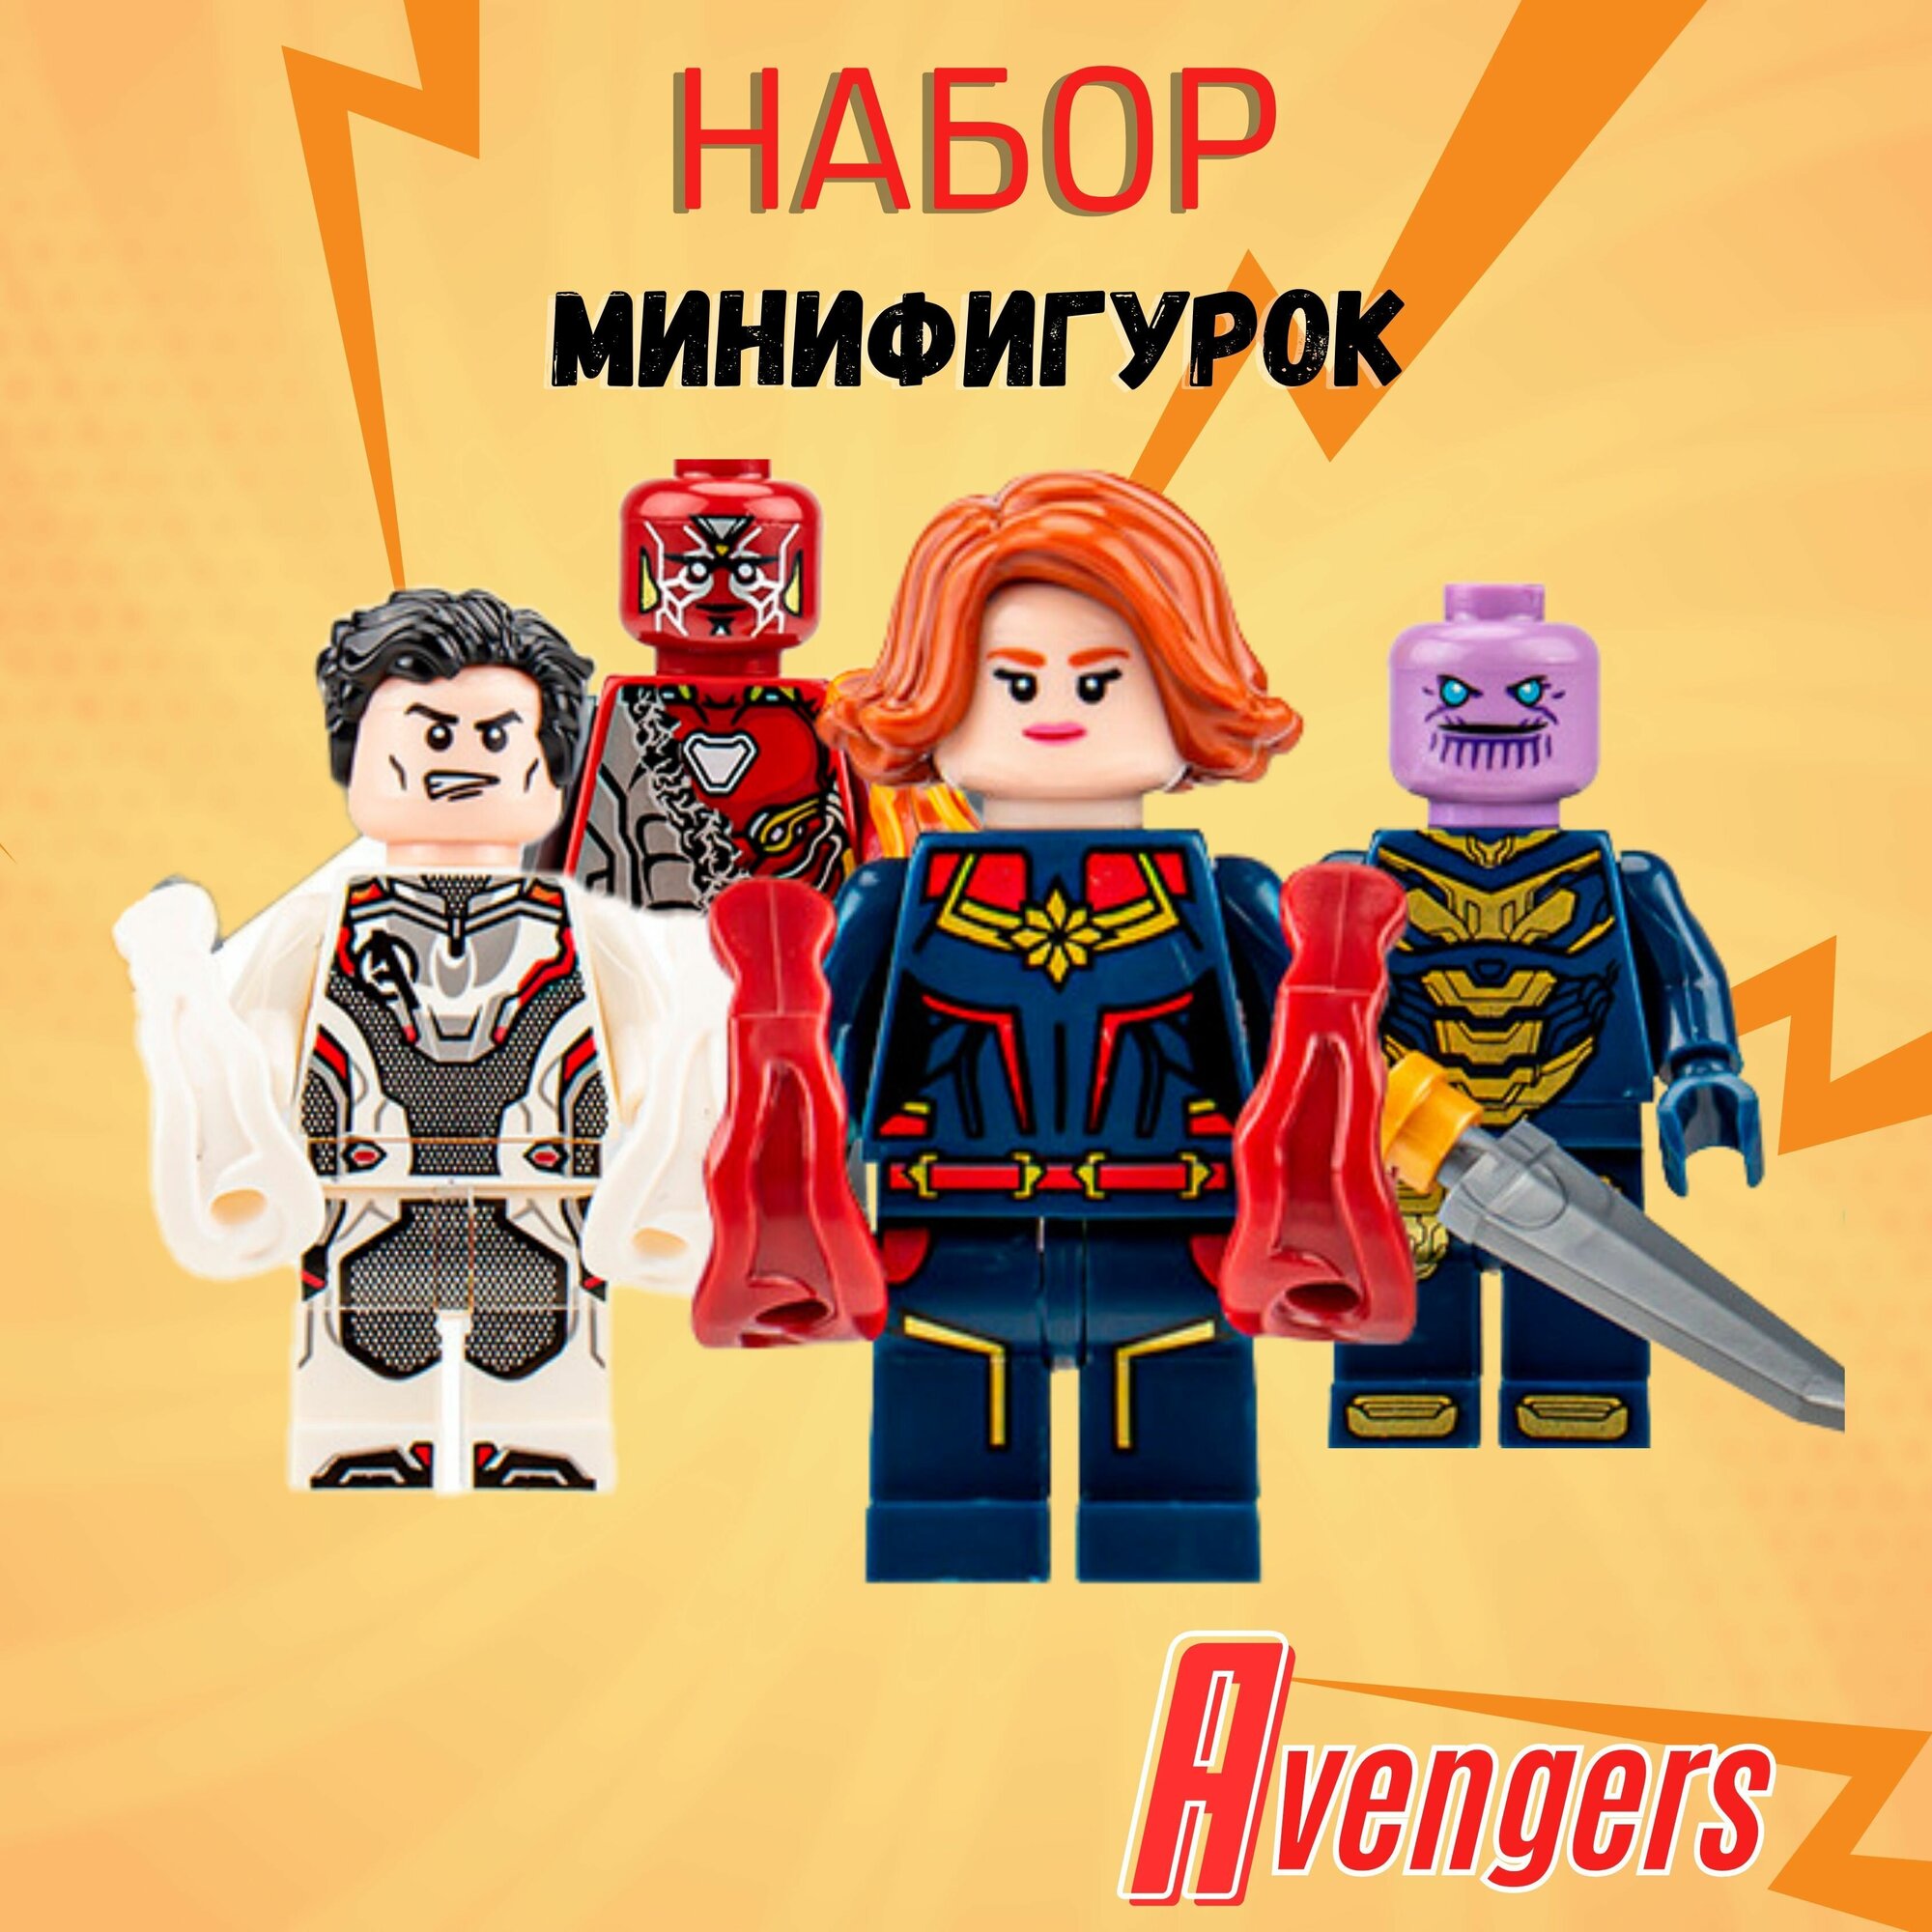 Набор минифигурок супергероев / Фигурки Марвел Танос, Железный человек, Тони Старк, Капитан Марвел / совместимы с лего 4 шт